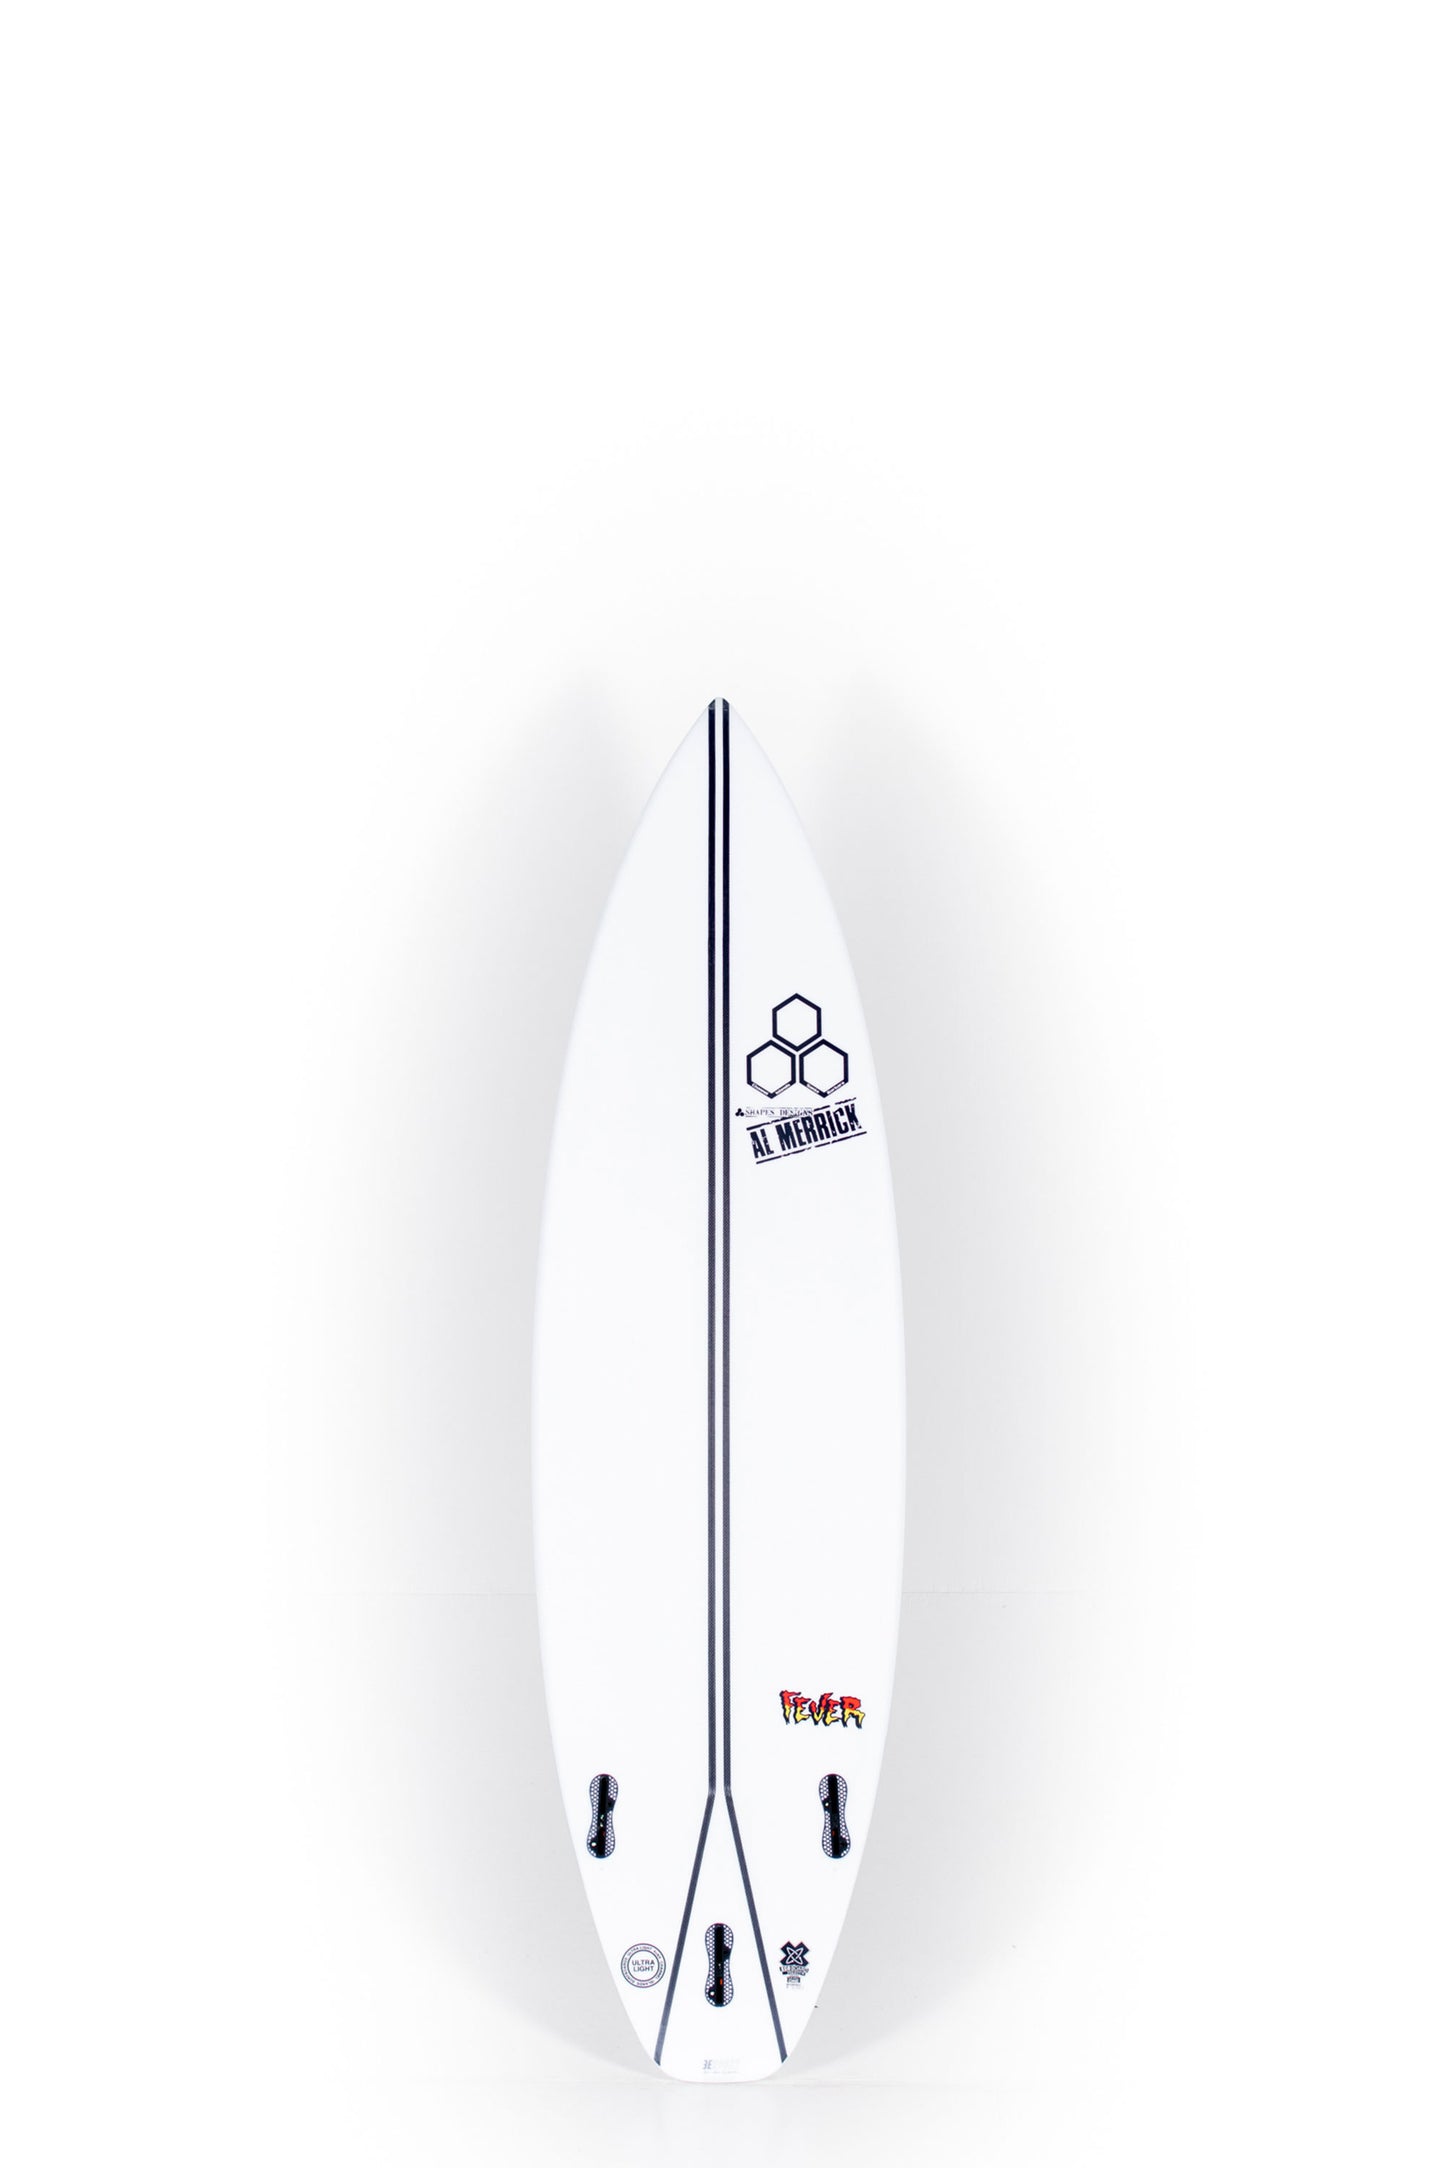 surfboard – Tagged 